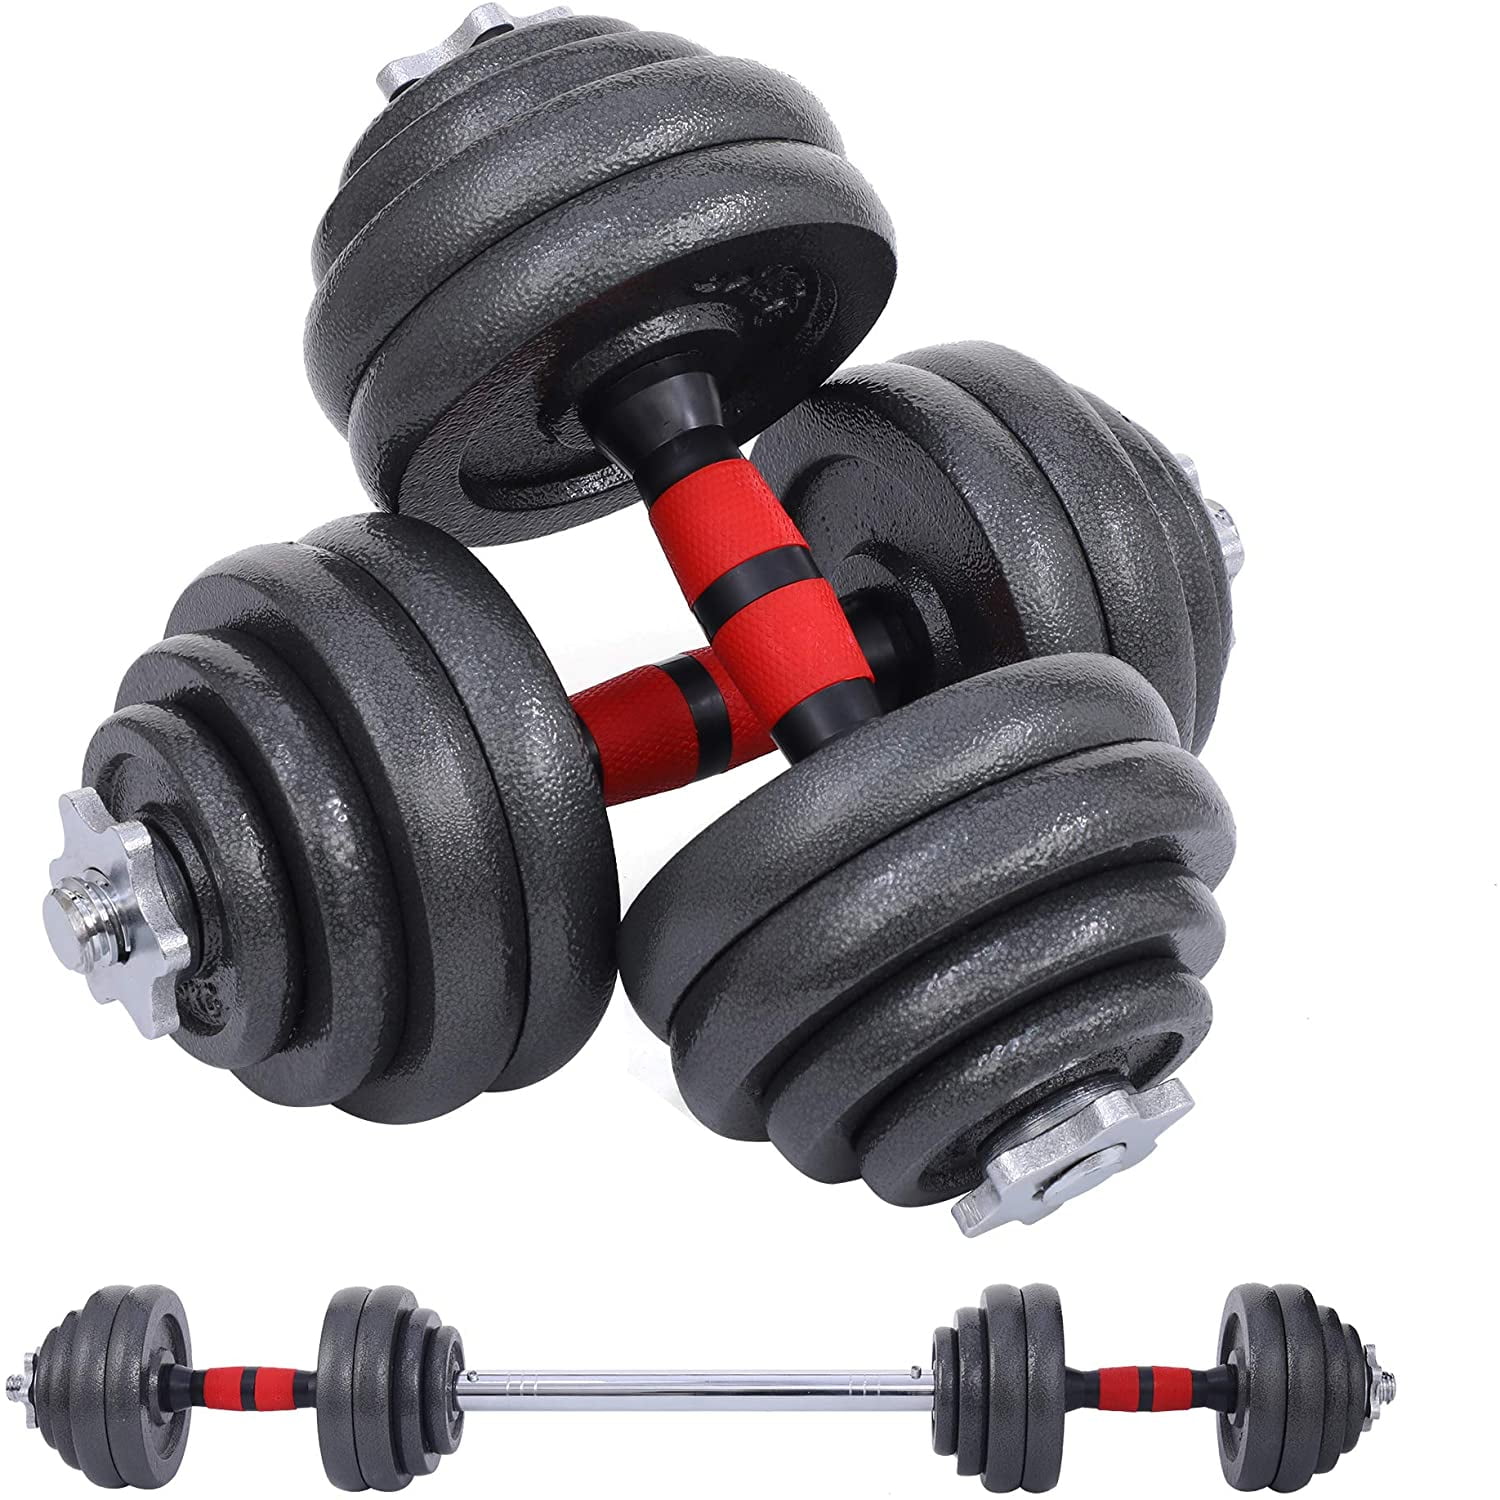 22-110 LB Adjustable Dumbbells Set Weight Barbell Fitness Gym Workout Exercise 